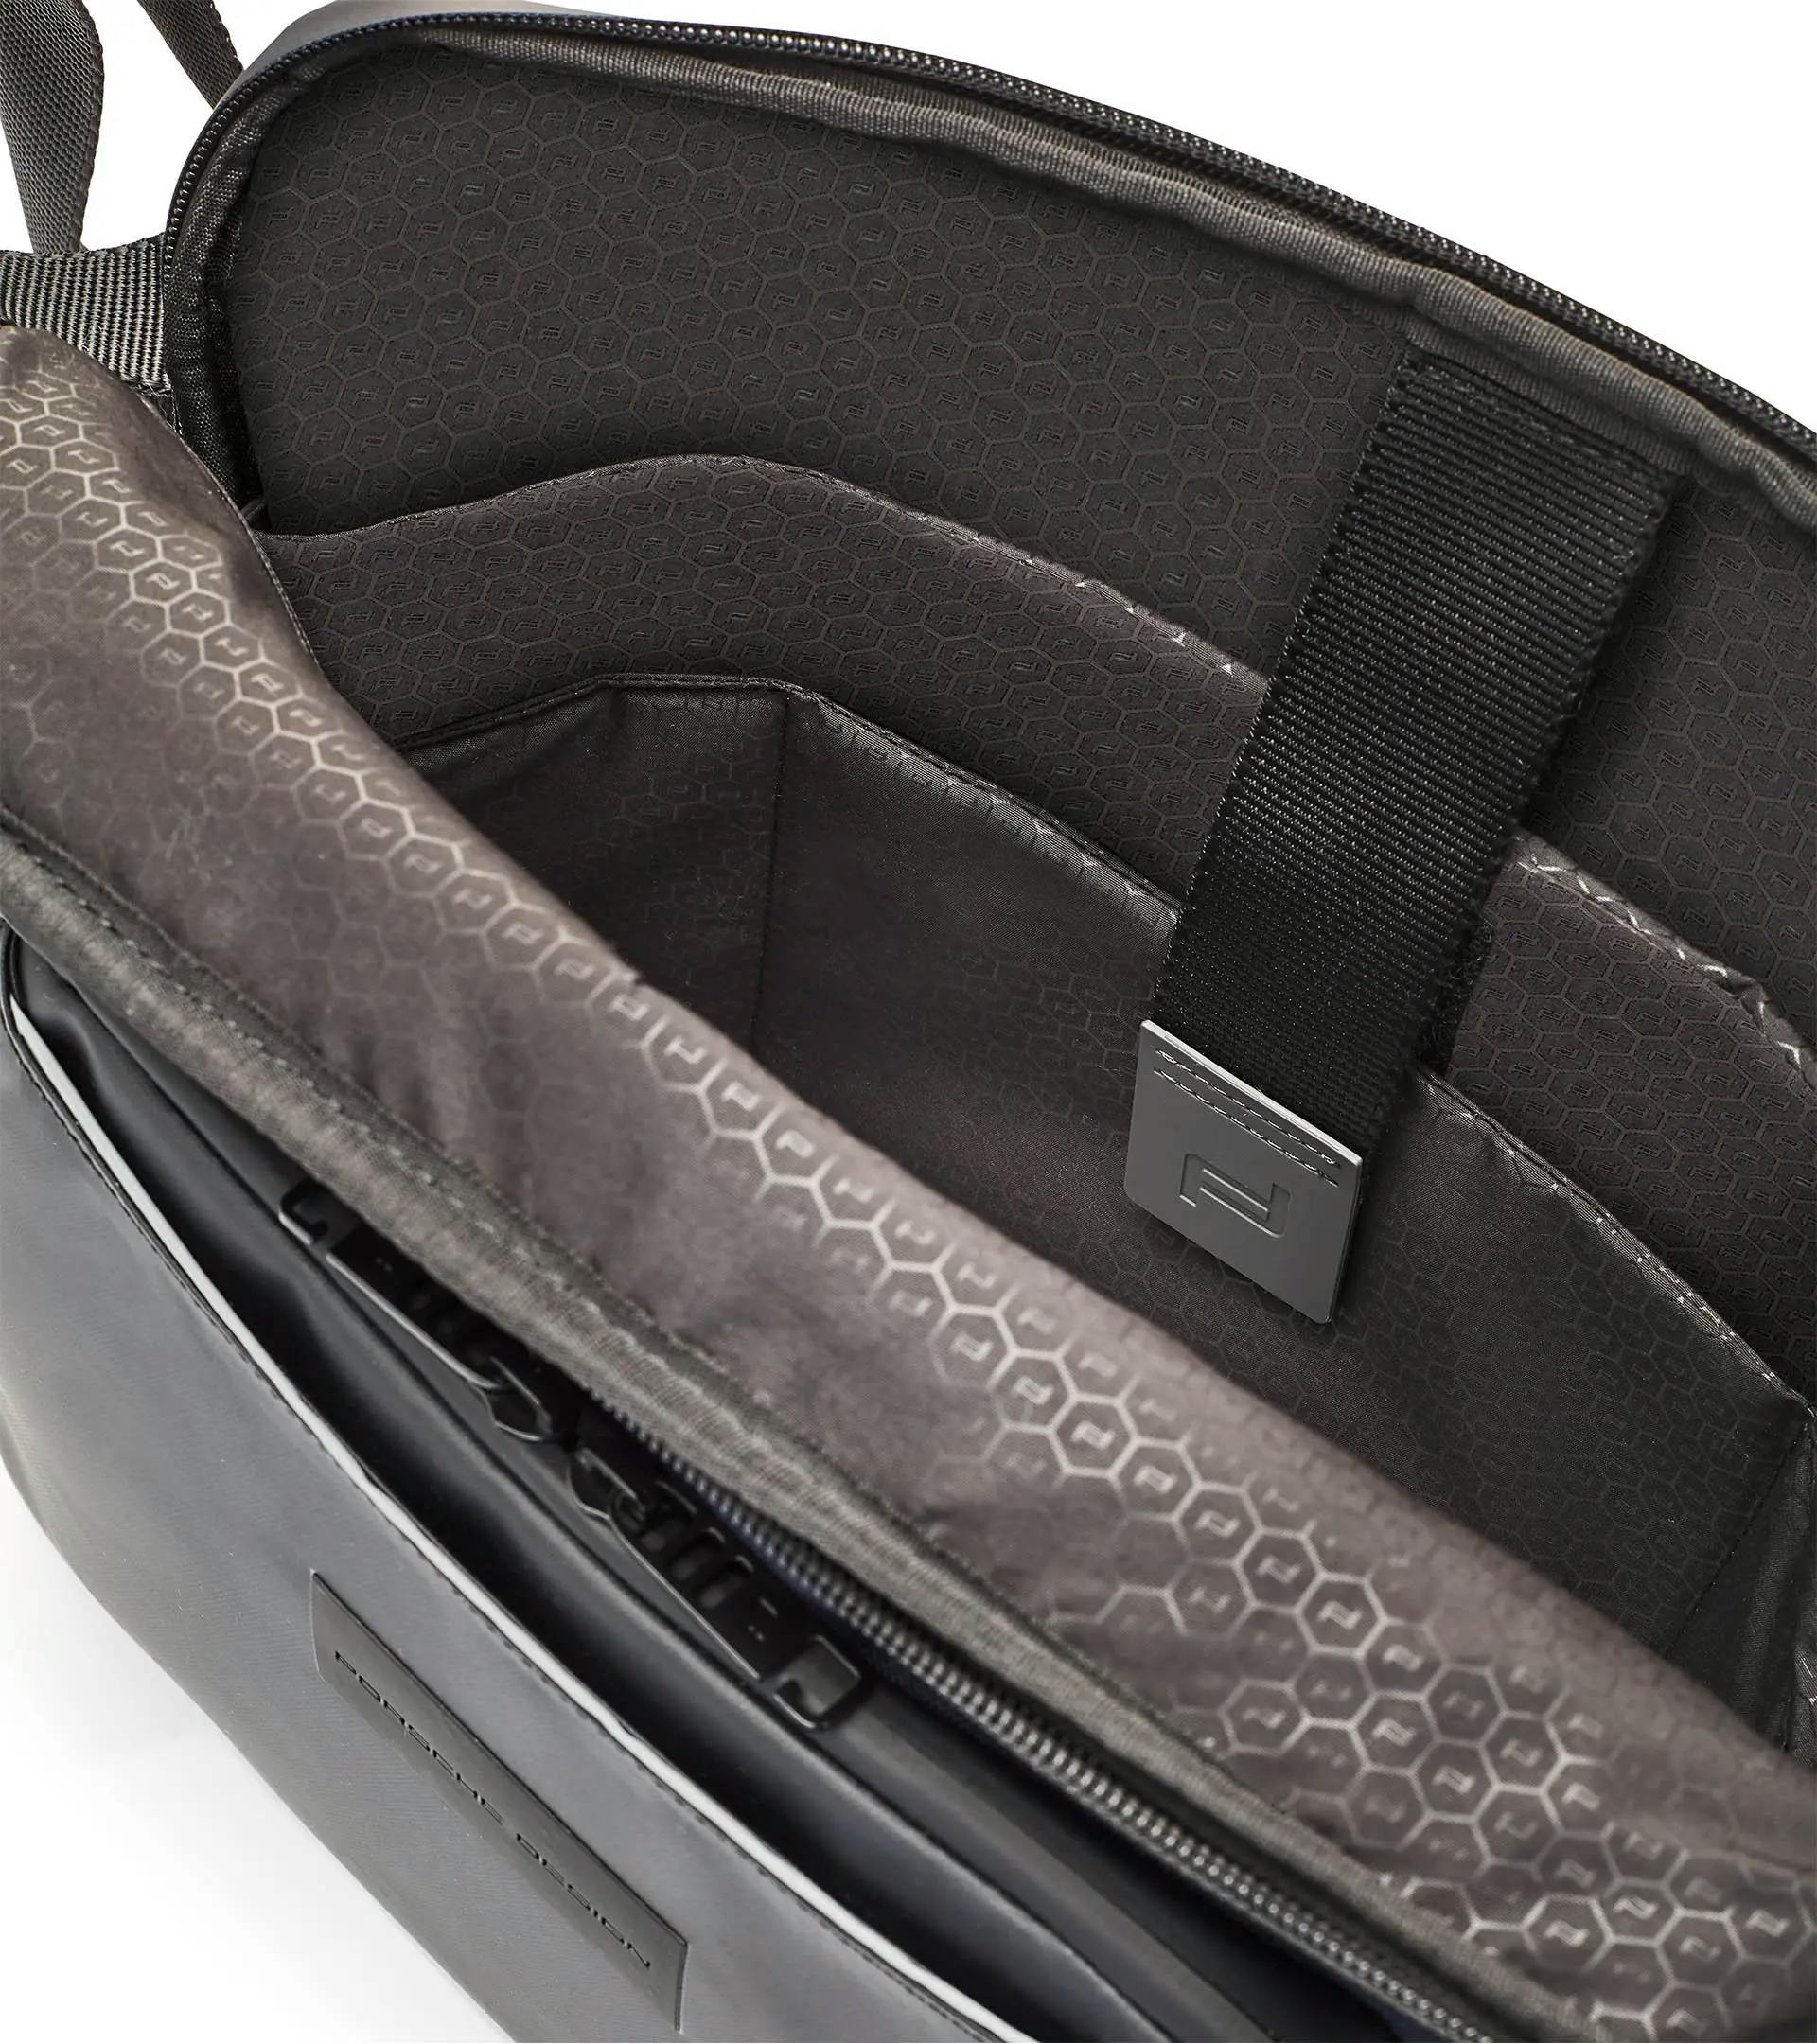 Porsche Design Urban Eco Messenger Bag – Black